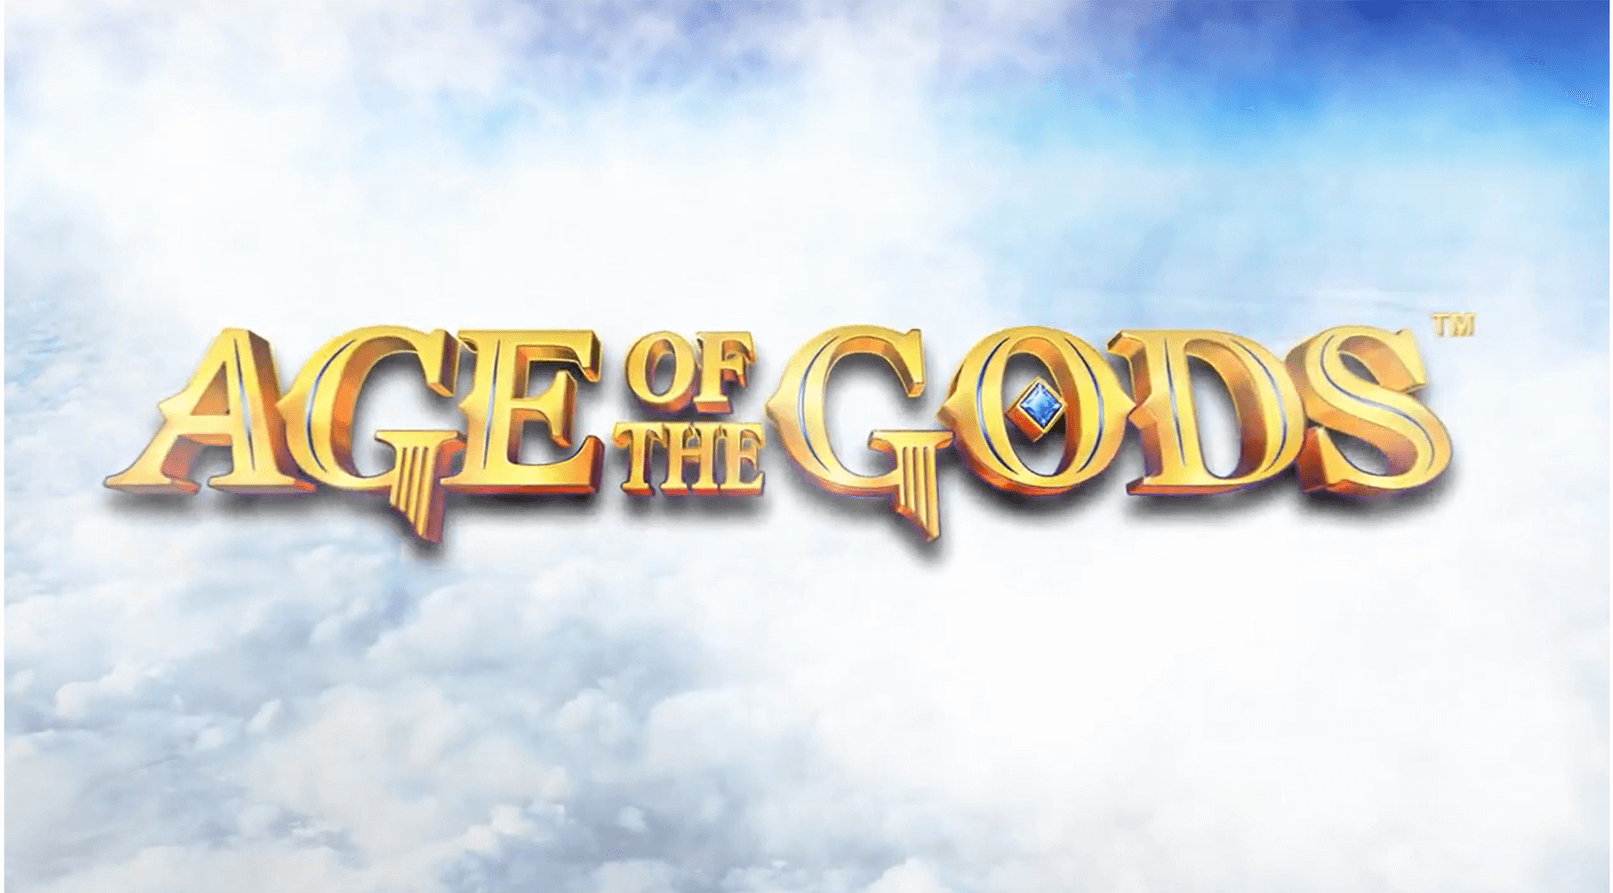 Age of the Gods slot